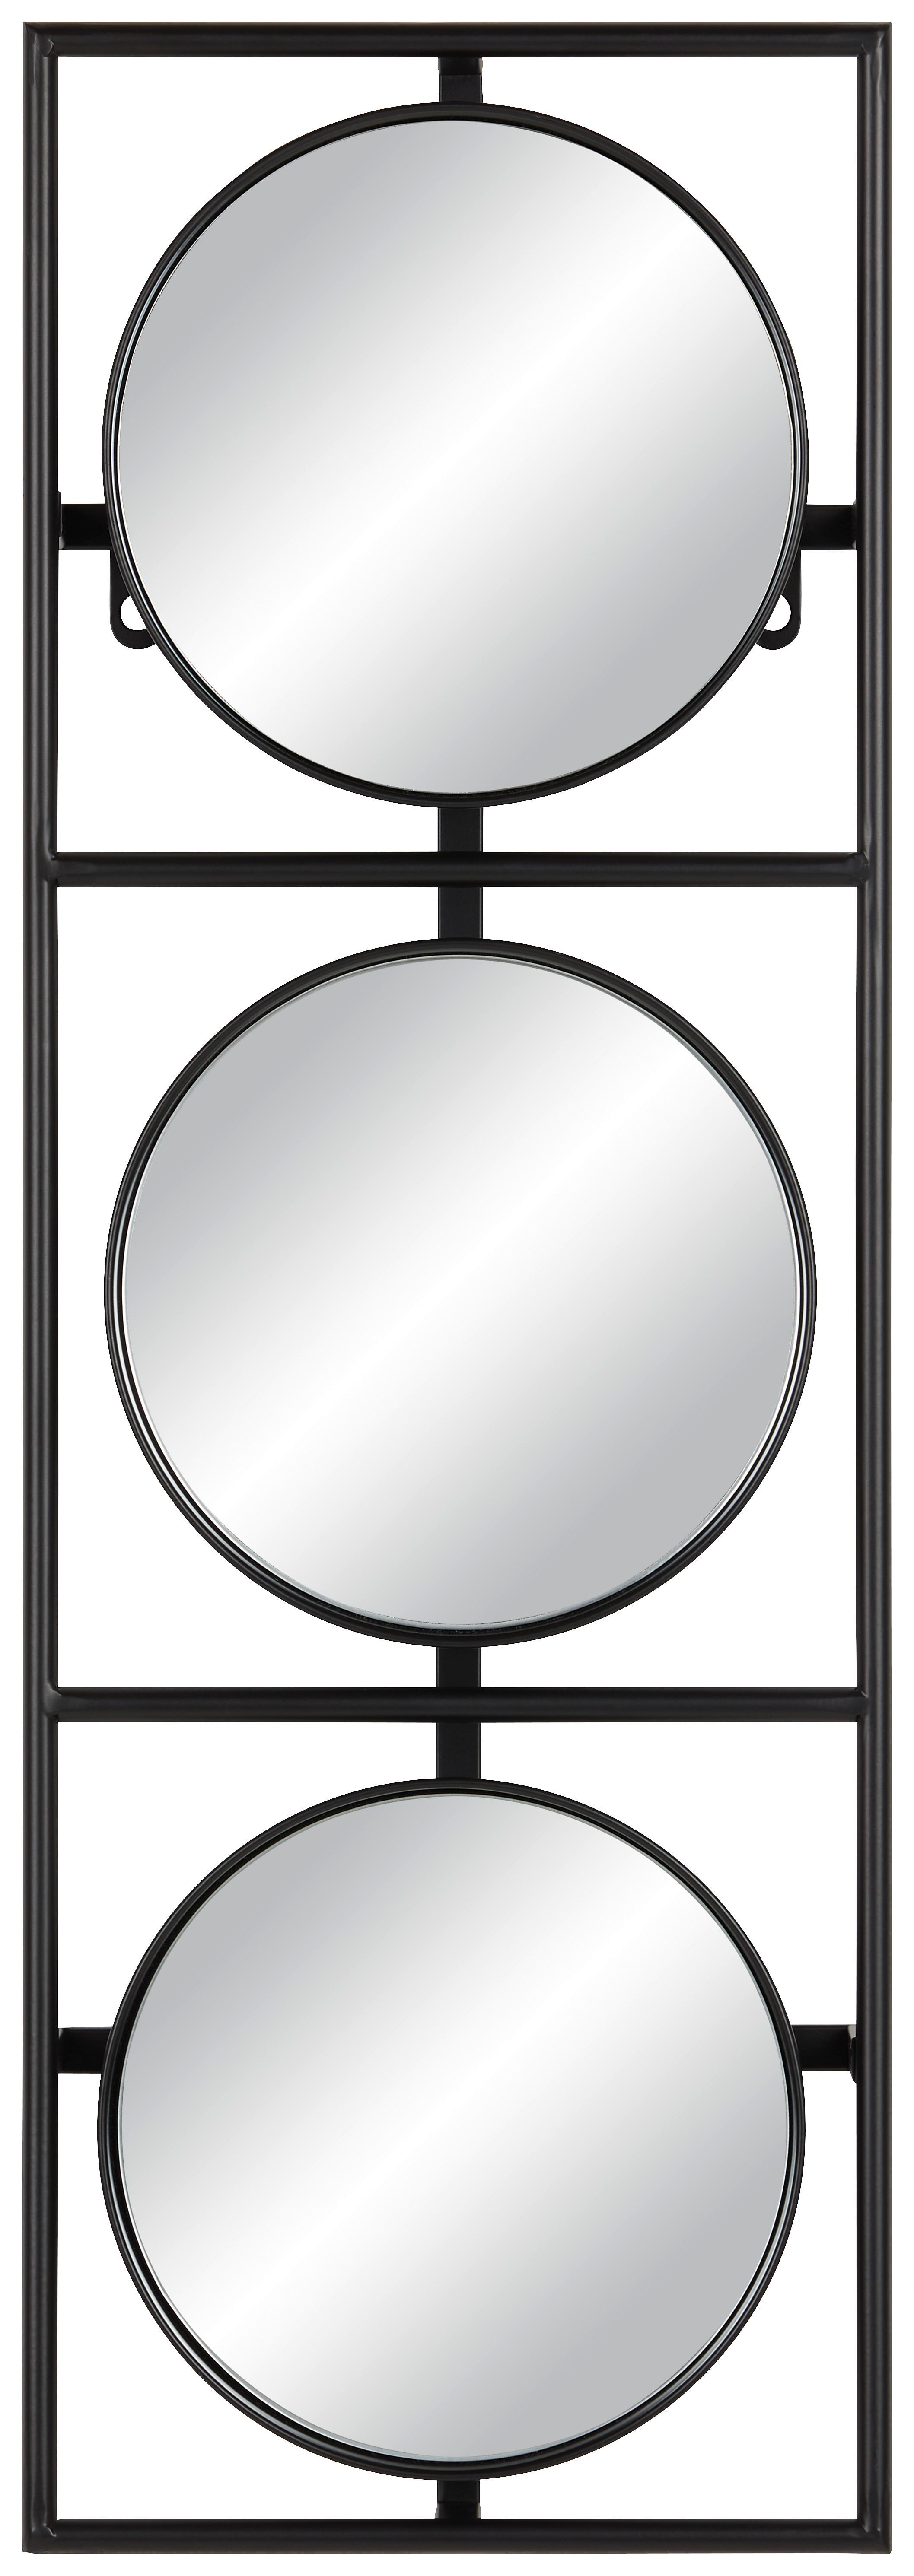 Stensko Ogledalo Maxim -Trend-, Kovina - črna, Konvencionalno, kovina/steklo (24/70/8cm) - Modern Living